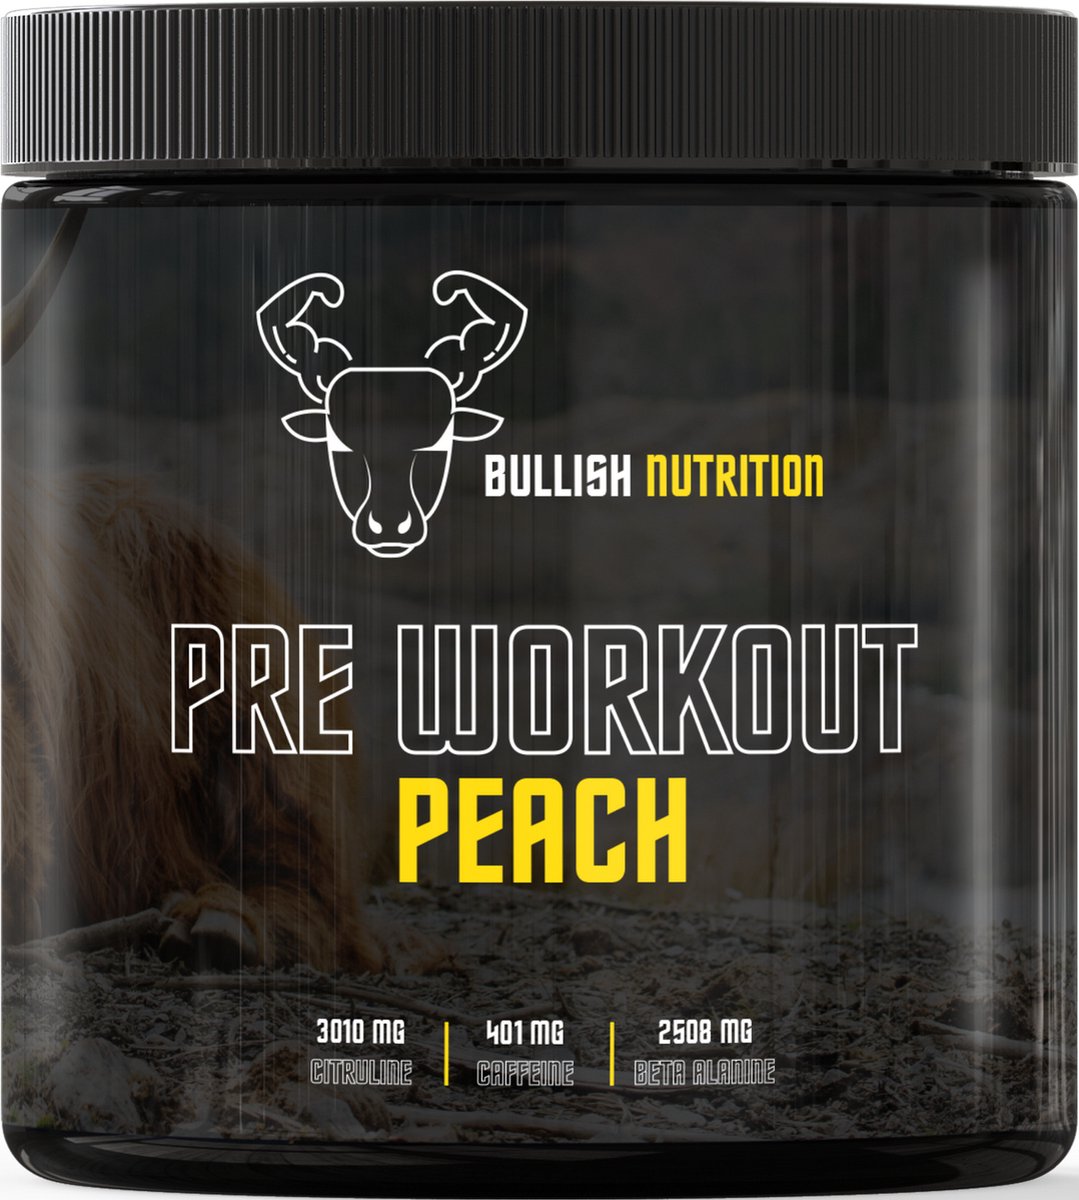 Bullishnutrition - Pre workout - peach - beste samenstelling van Nederland - 401 mg cafeïne!!